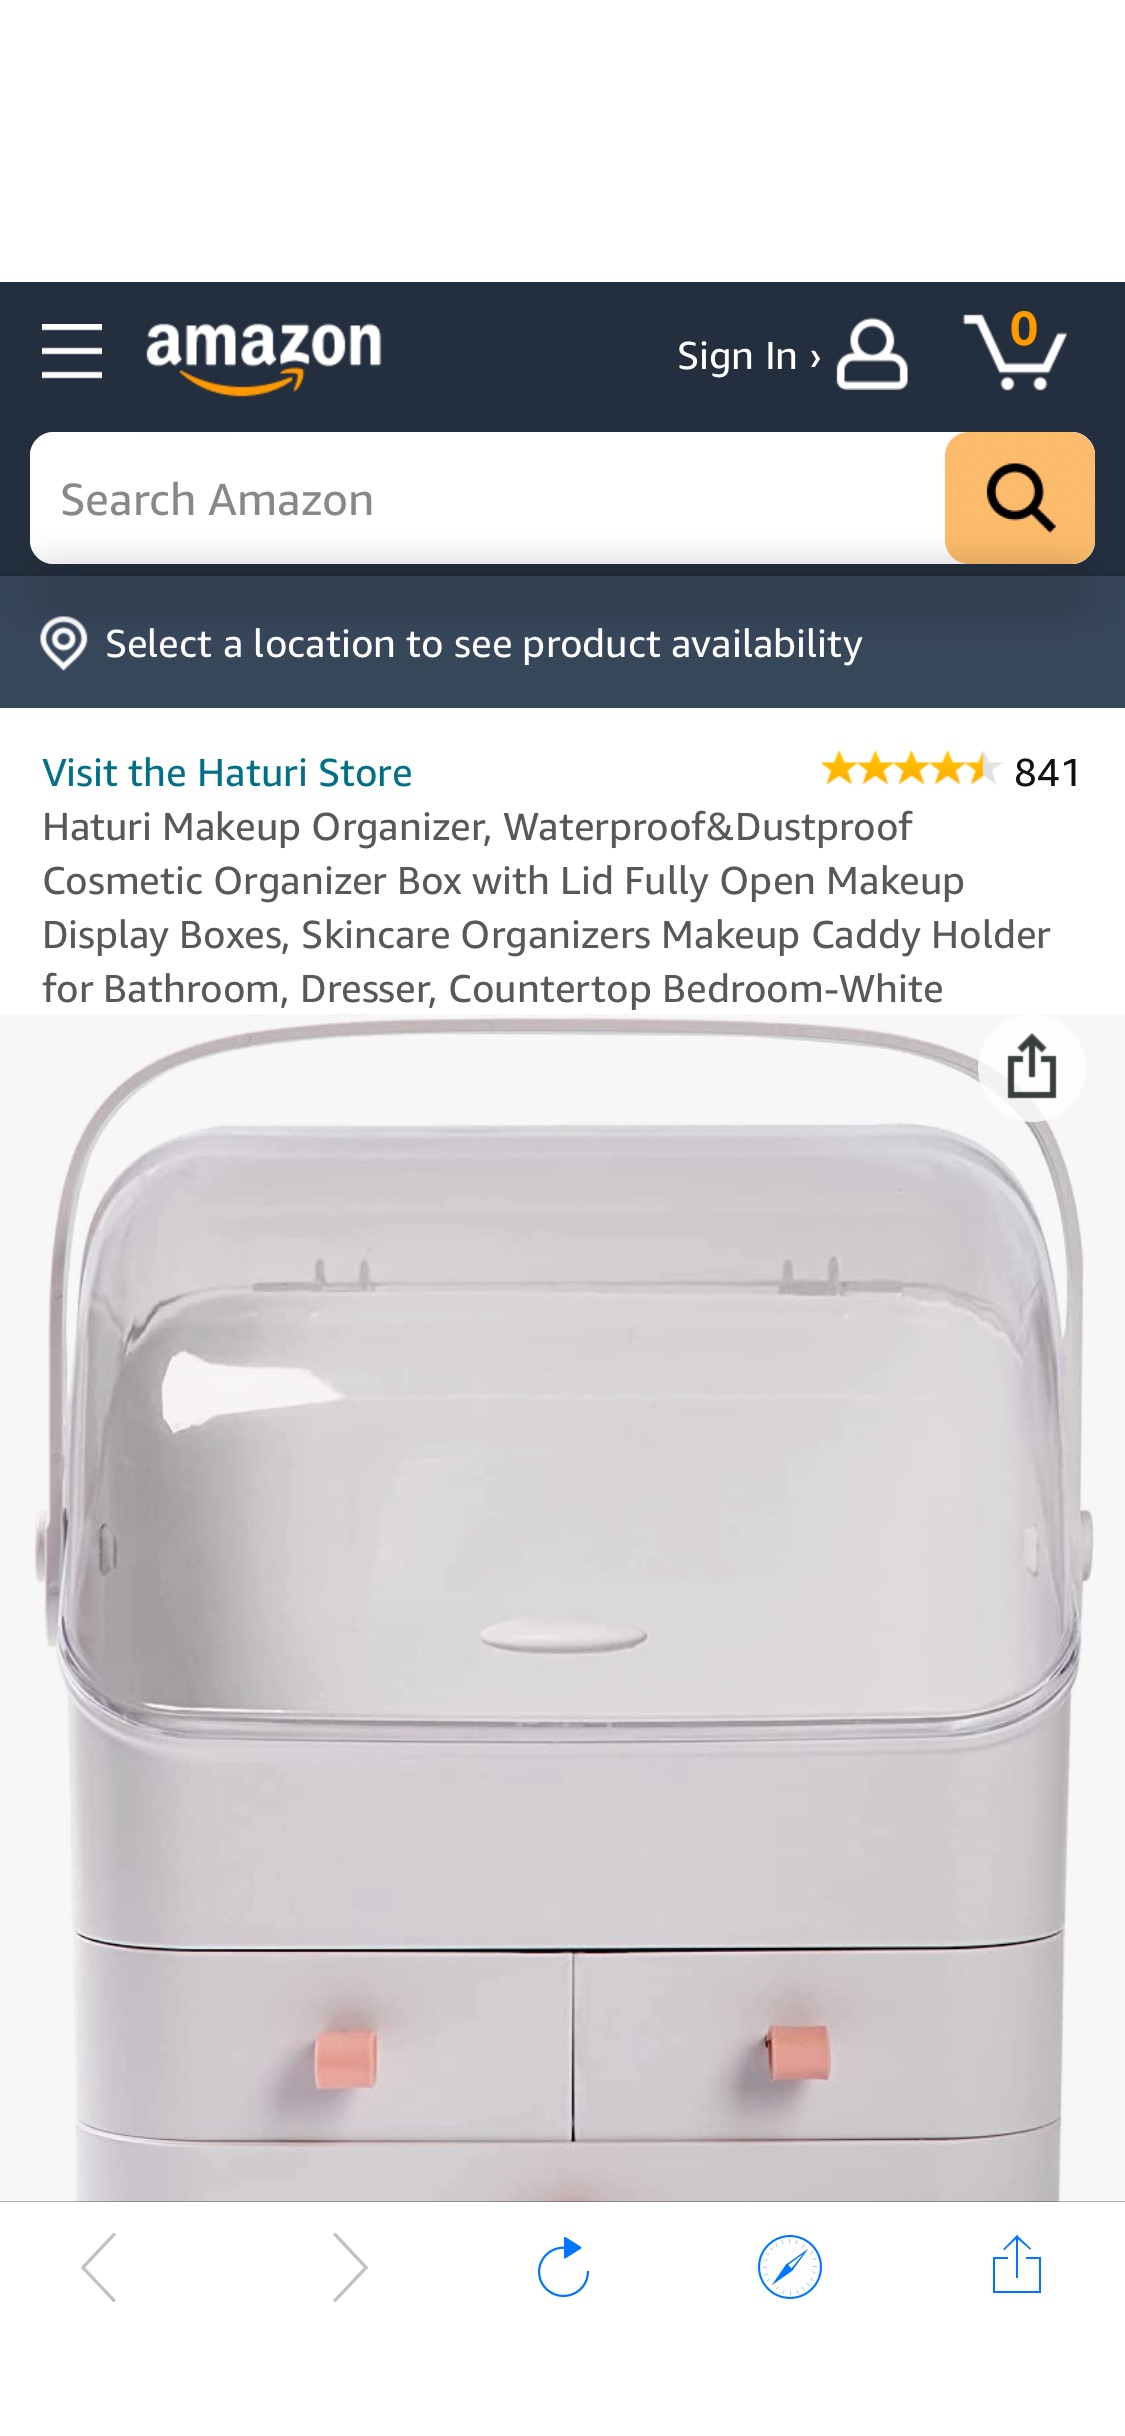 Amazon.com: Haturi Makeup Organizer, Waterproof&Dustproof Cosmetic Organizer Box with Lid Fully Open Makeup Display Boxes, Skincare Organizers Makeup Caddy Holder for Bathroom, Dresser, Countertop